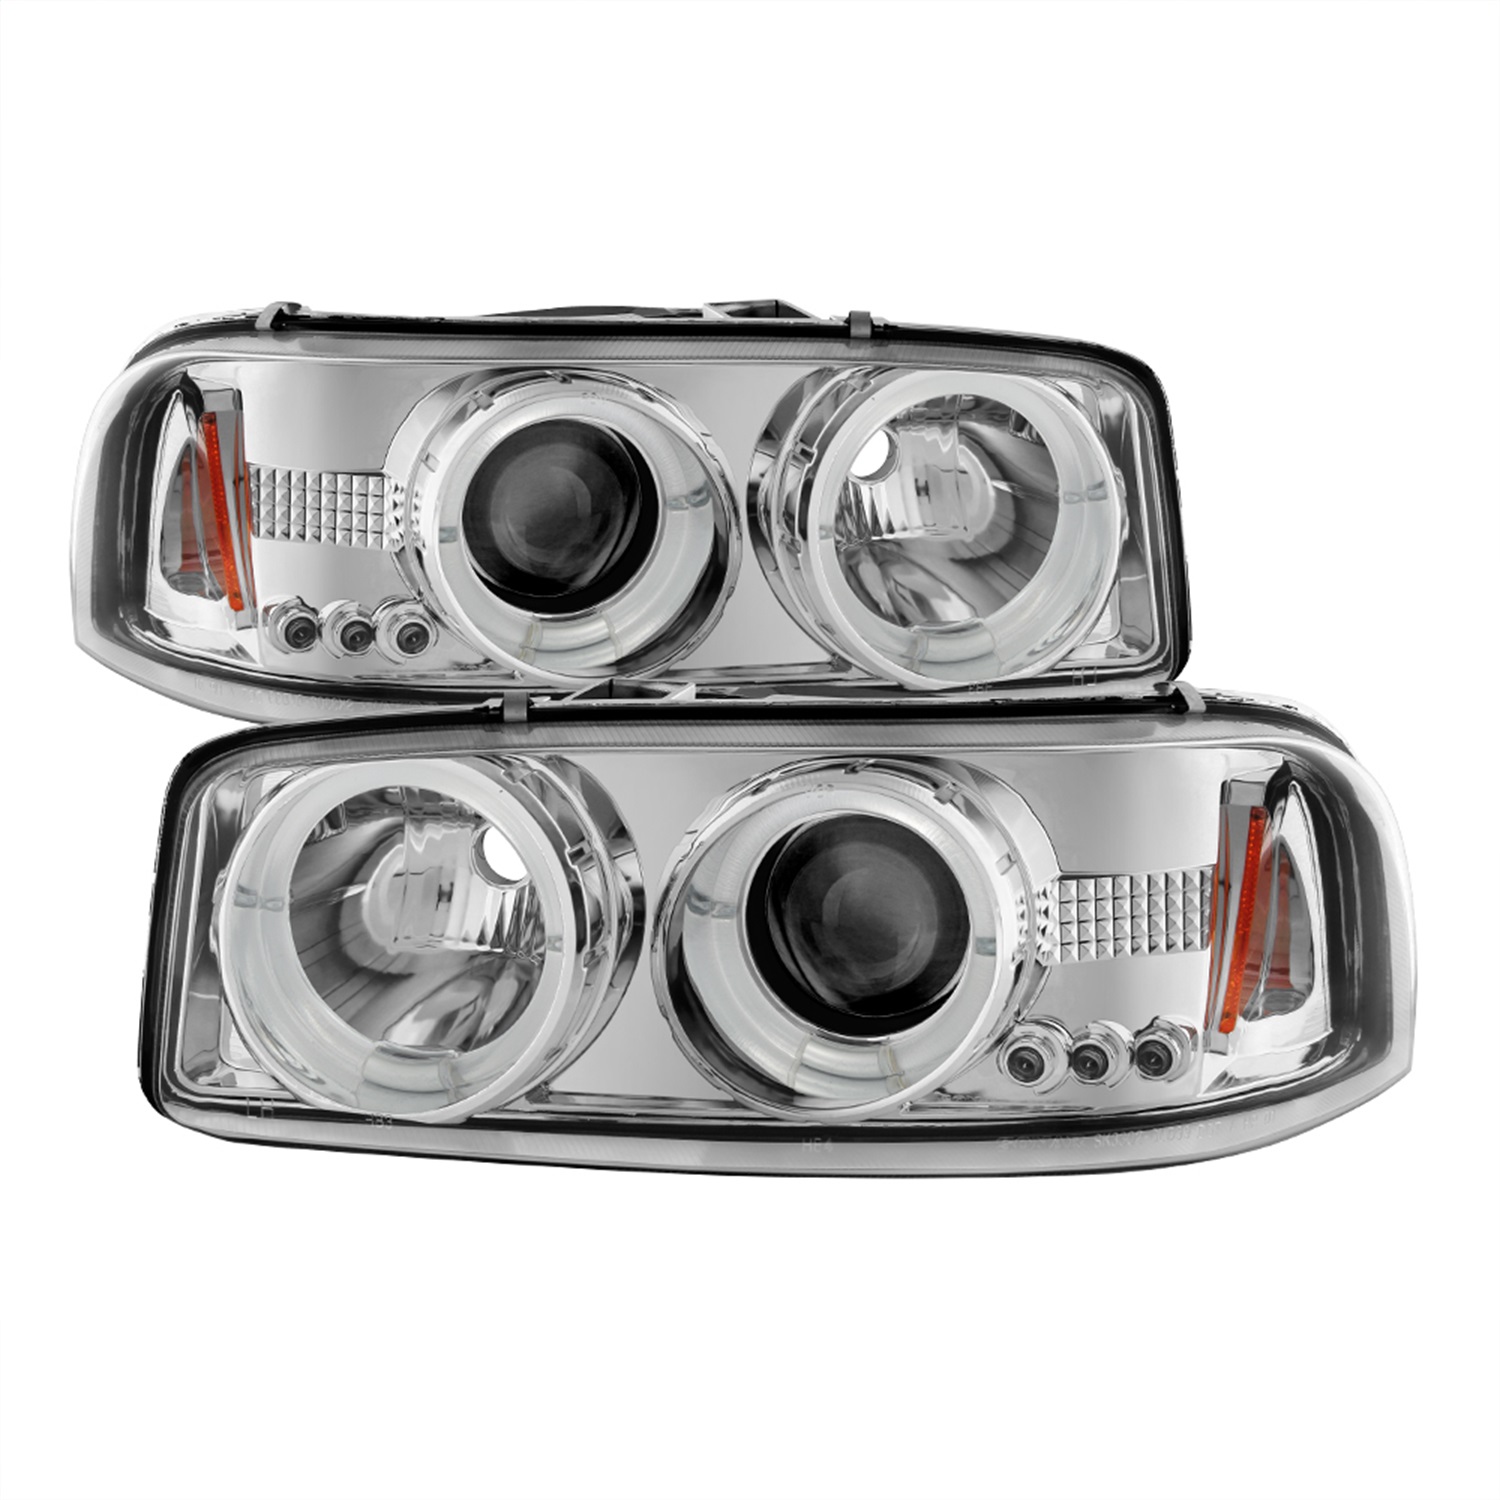 Spyder Auto 5009364 Projector Headlights